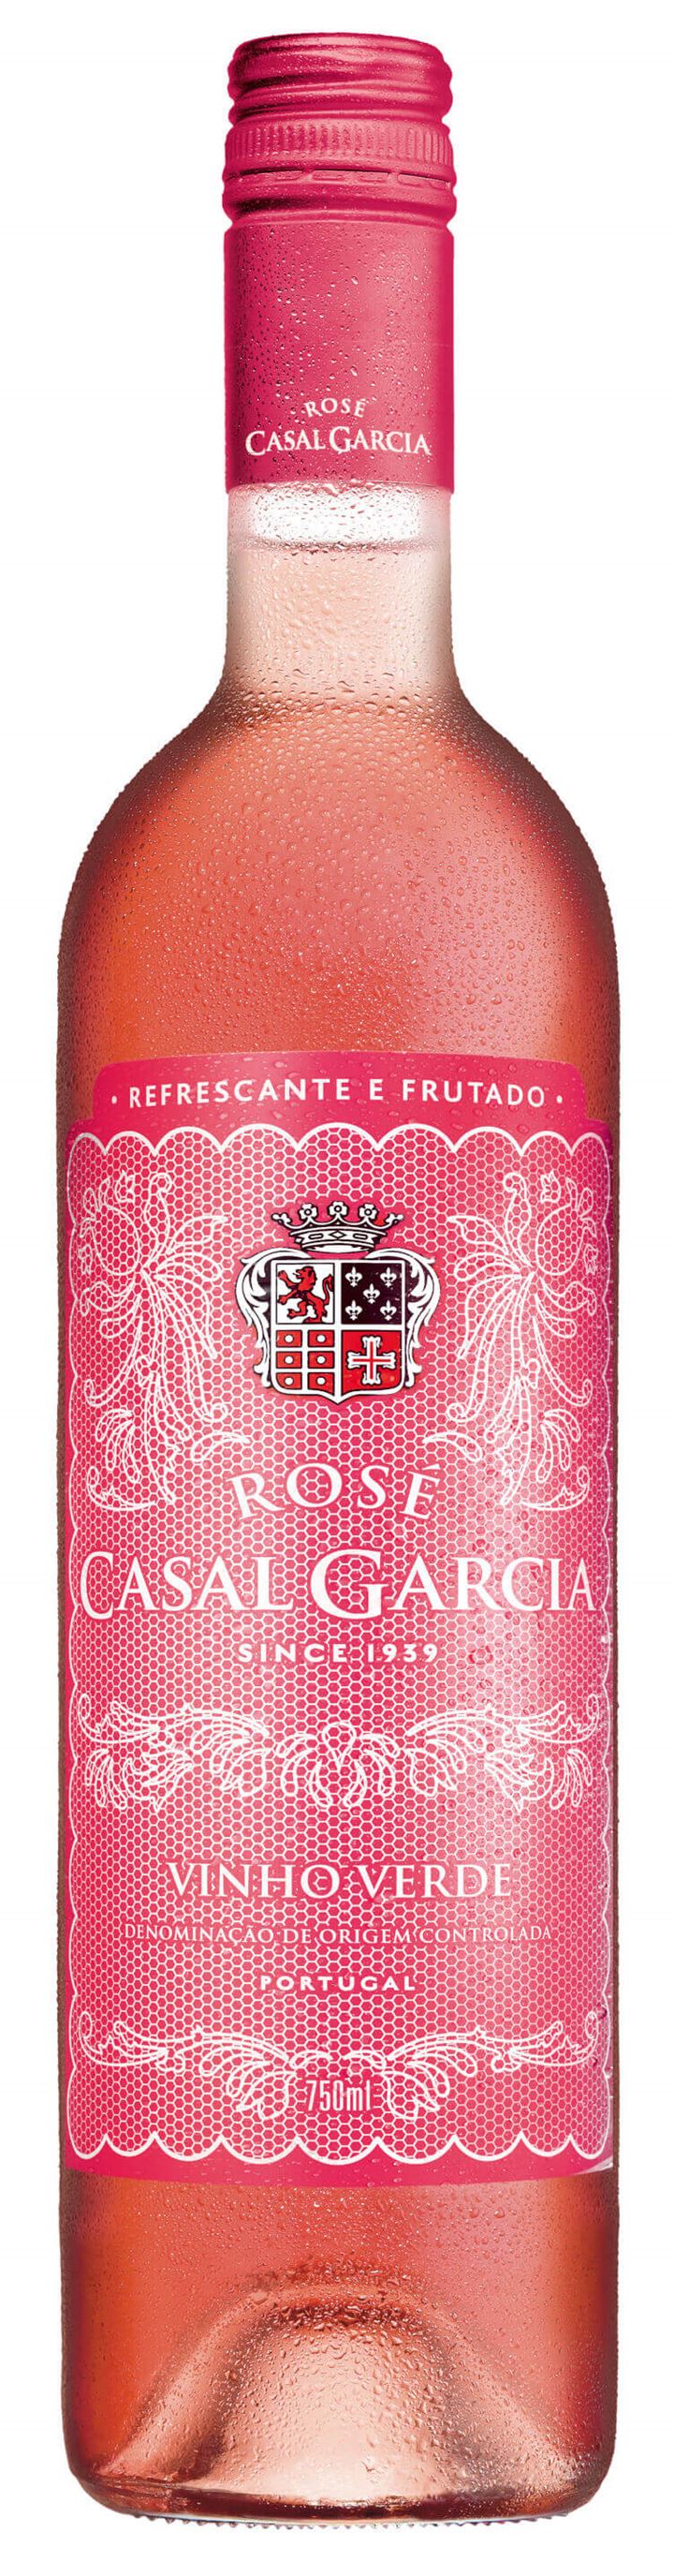 Vinho Verde Rosé Casal Garcia 750ml